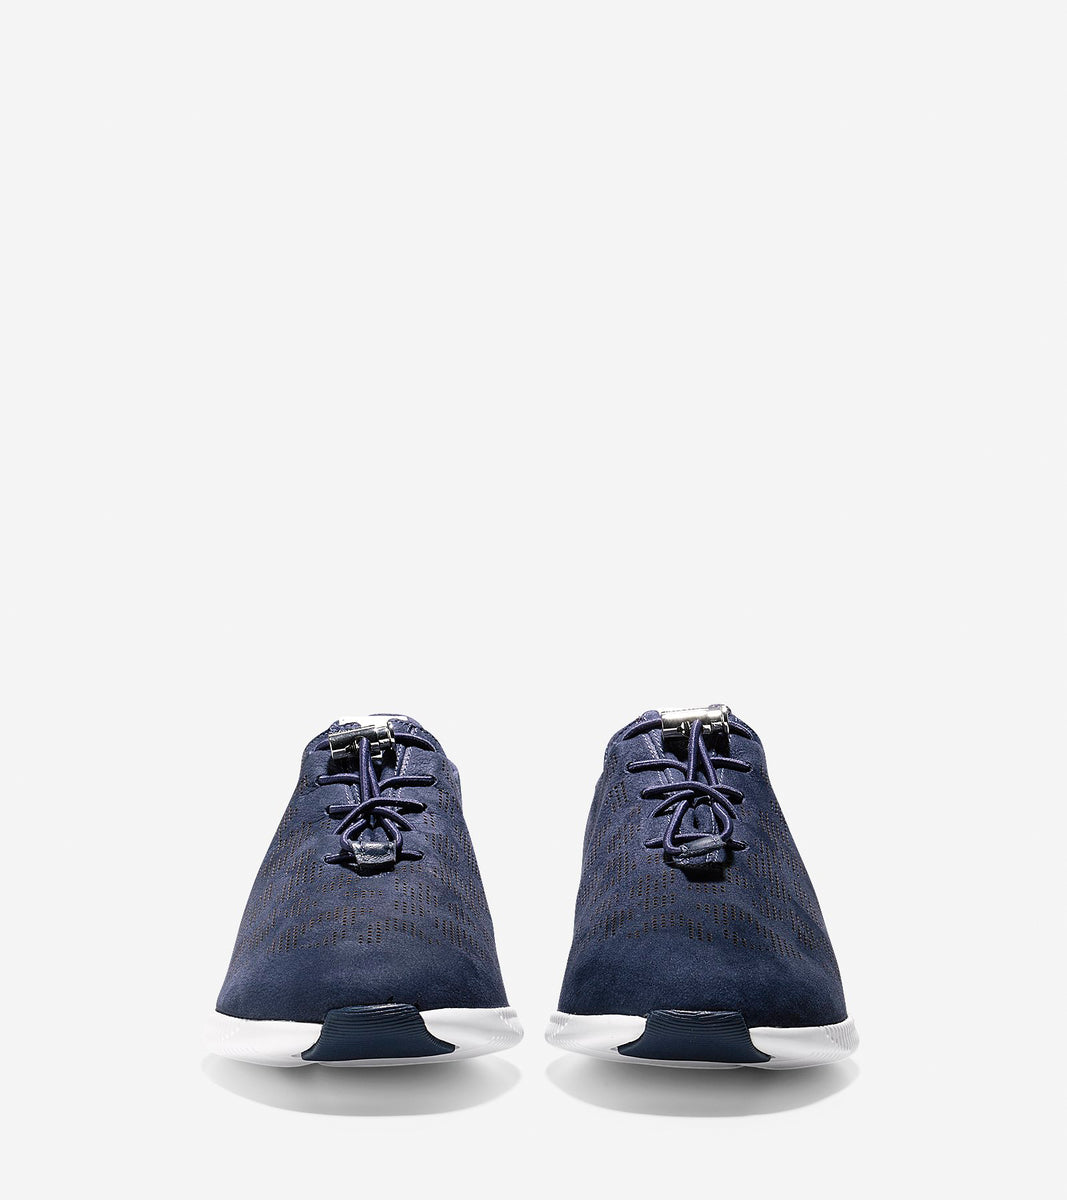 ColeHaan-StudiøGrand Pack-and-Go Sneaker-w07723-Marine Blue Perforated Ocelot Print Nubuck